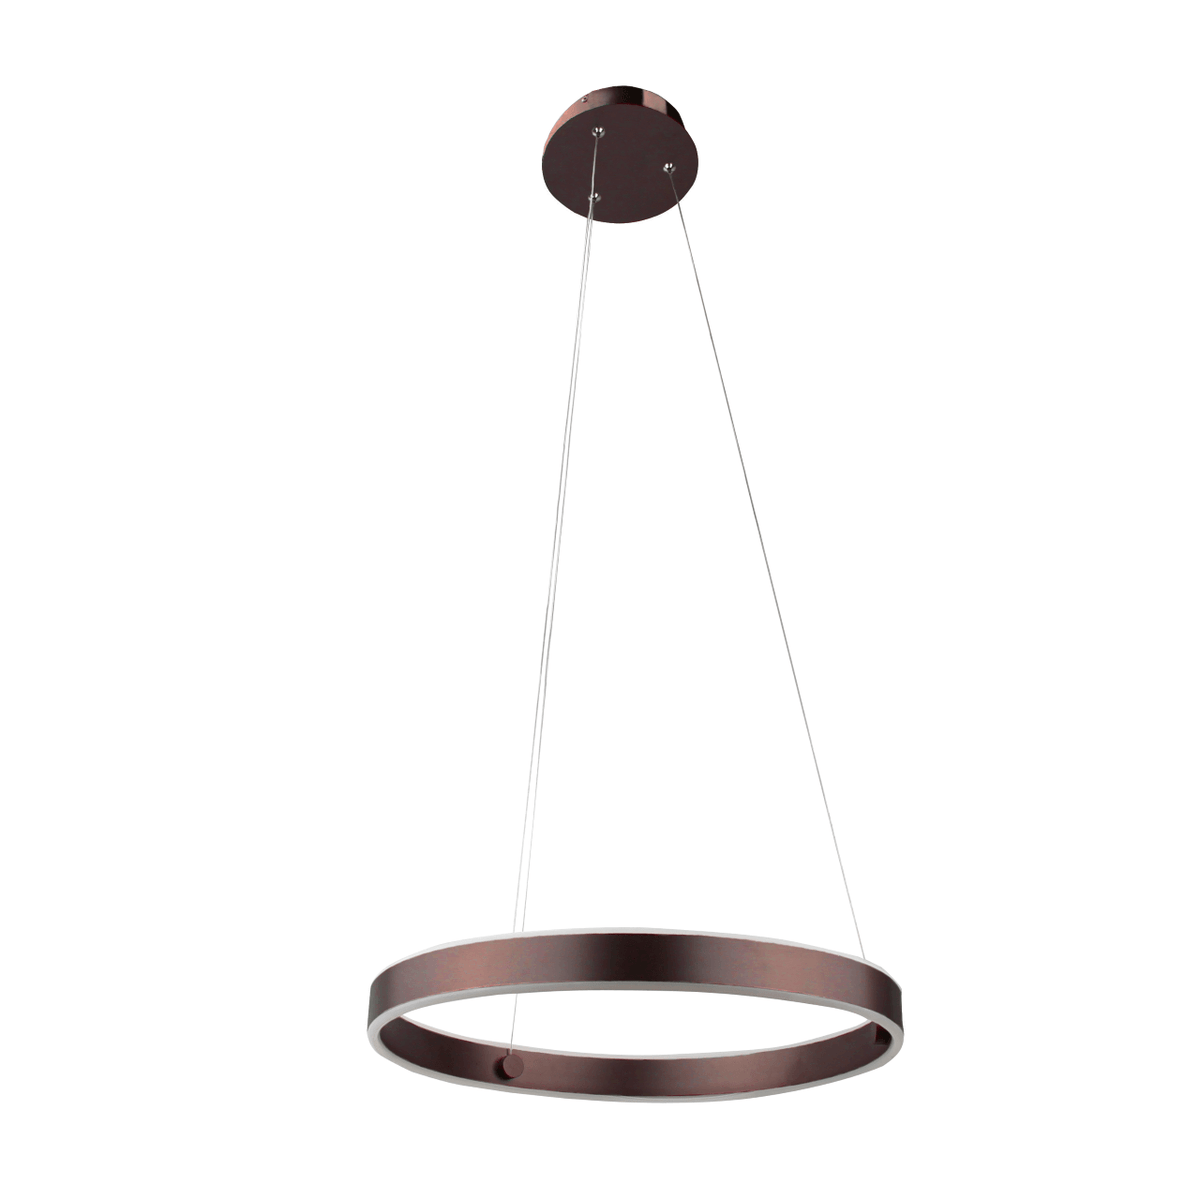 AVA - Modern Acrylic LED Ceiling Light Ring Chandelier Pendant - Coffee Brown - Vivio Lighting